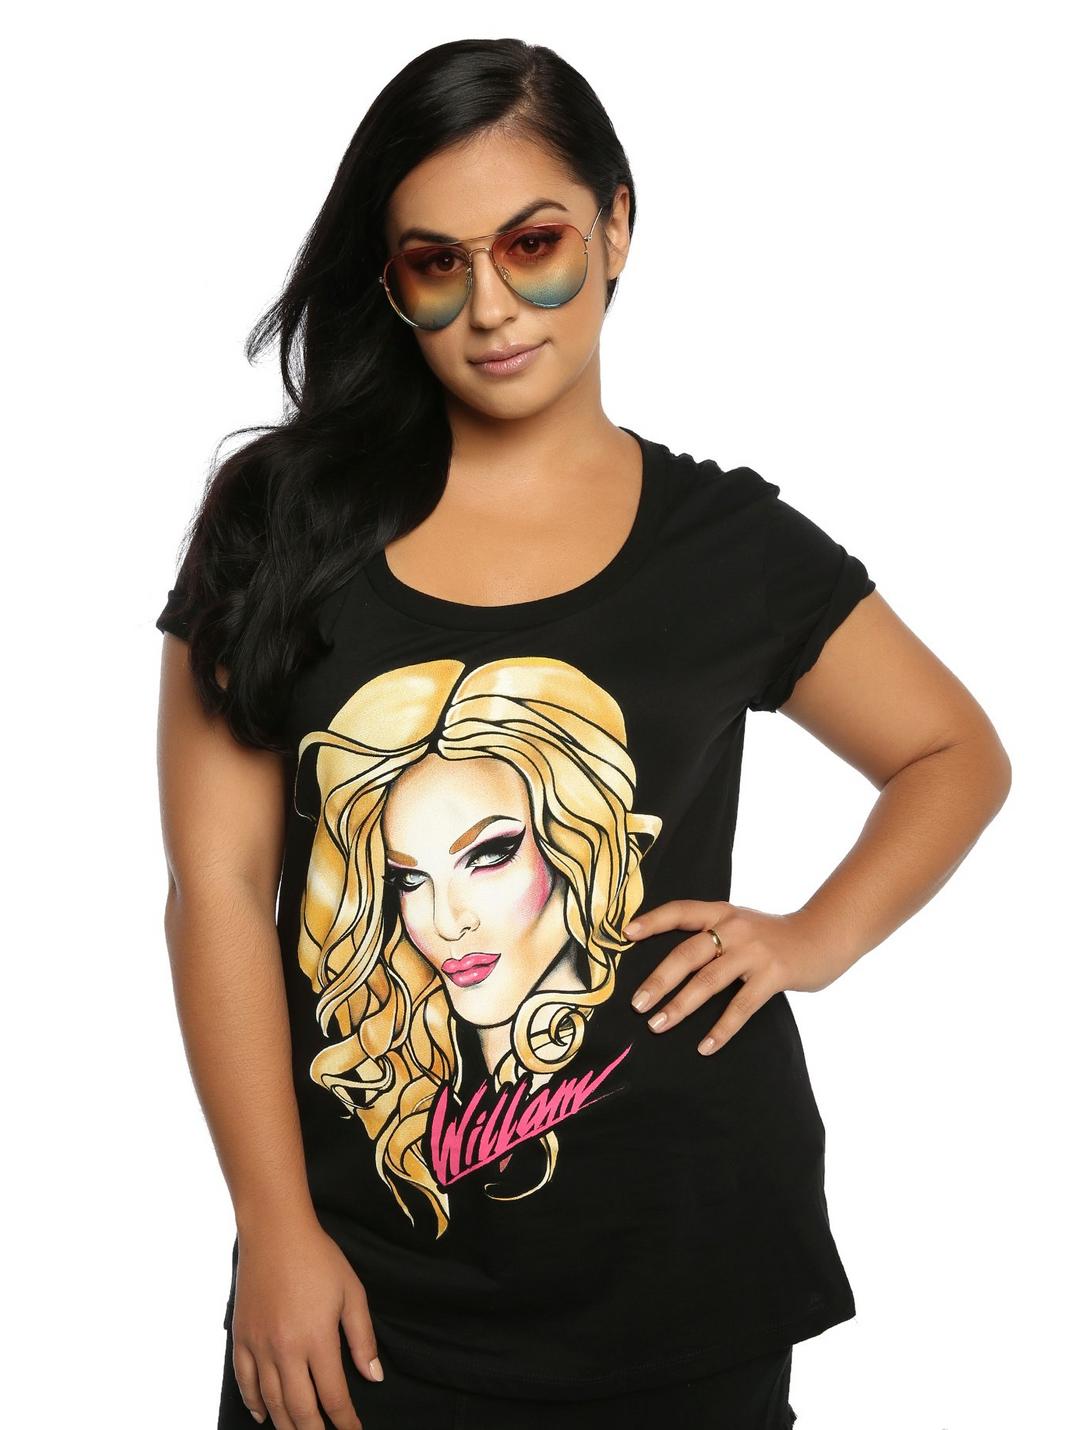 Drag Queen Merch Willam Belli Girls T-Shirt Plus Size, BLACK, hi-res